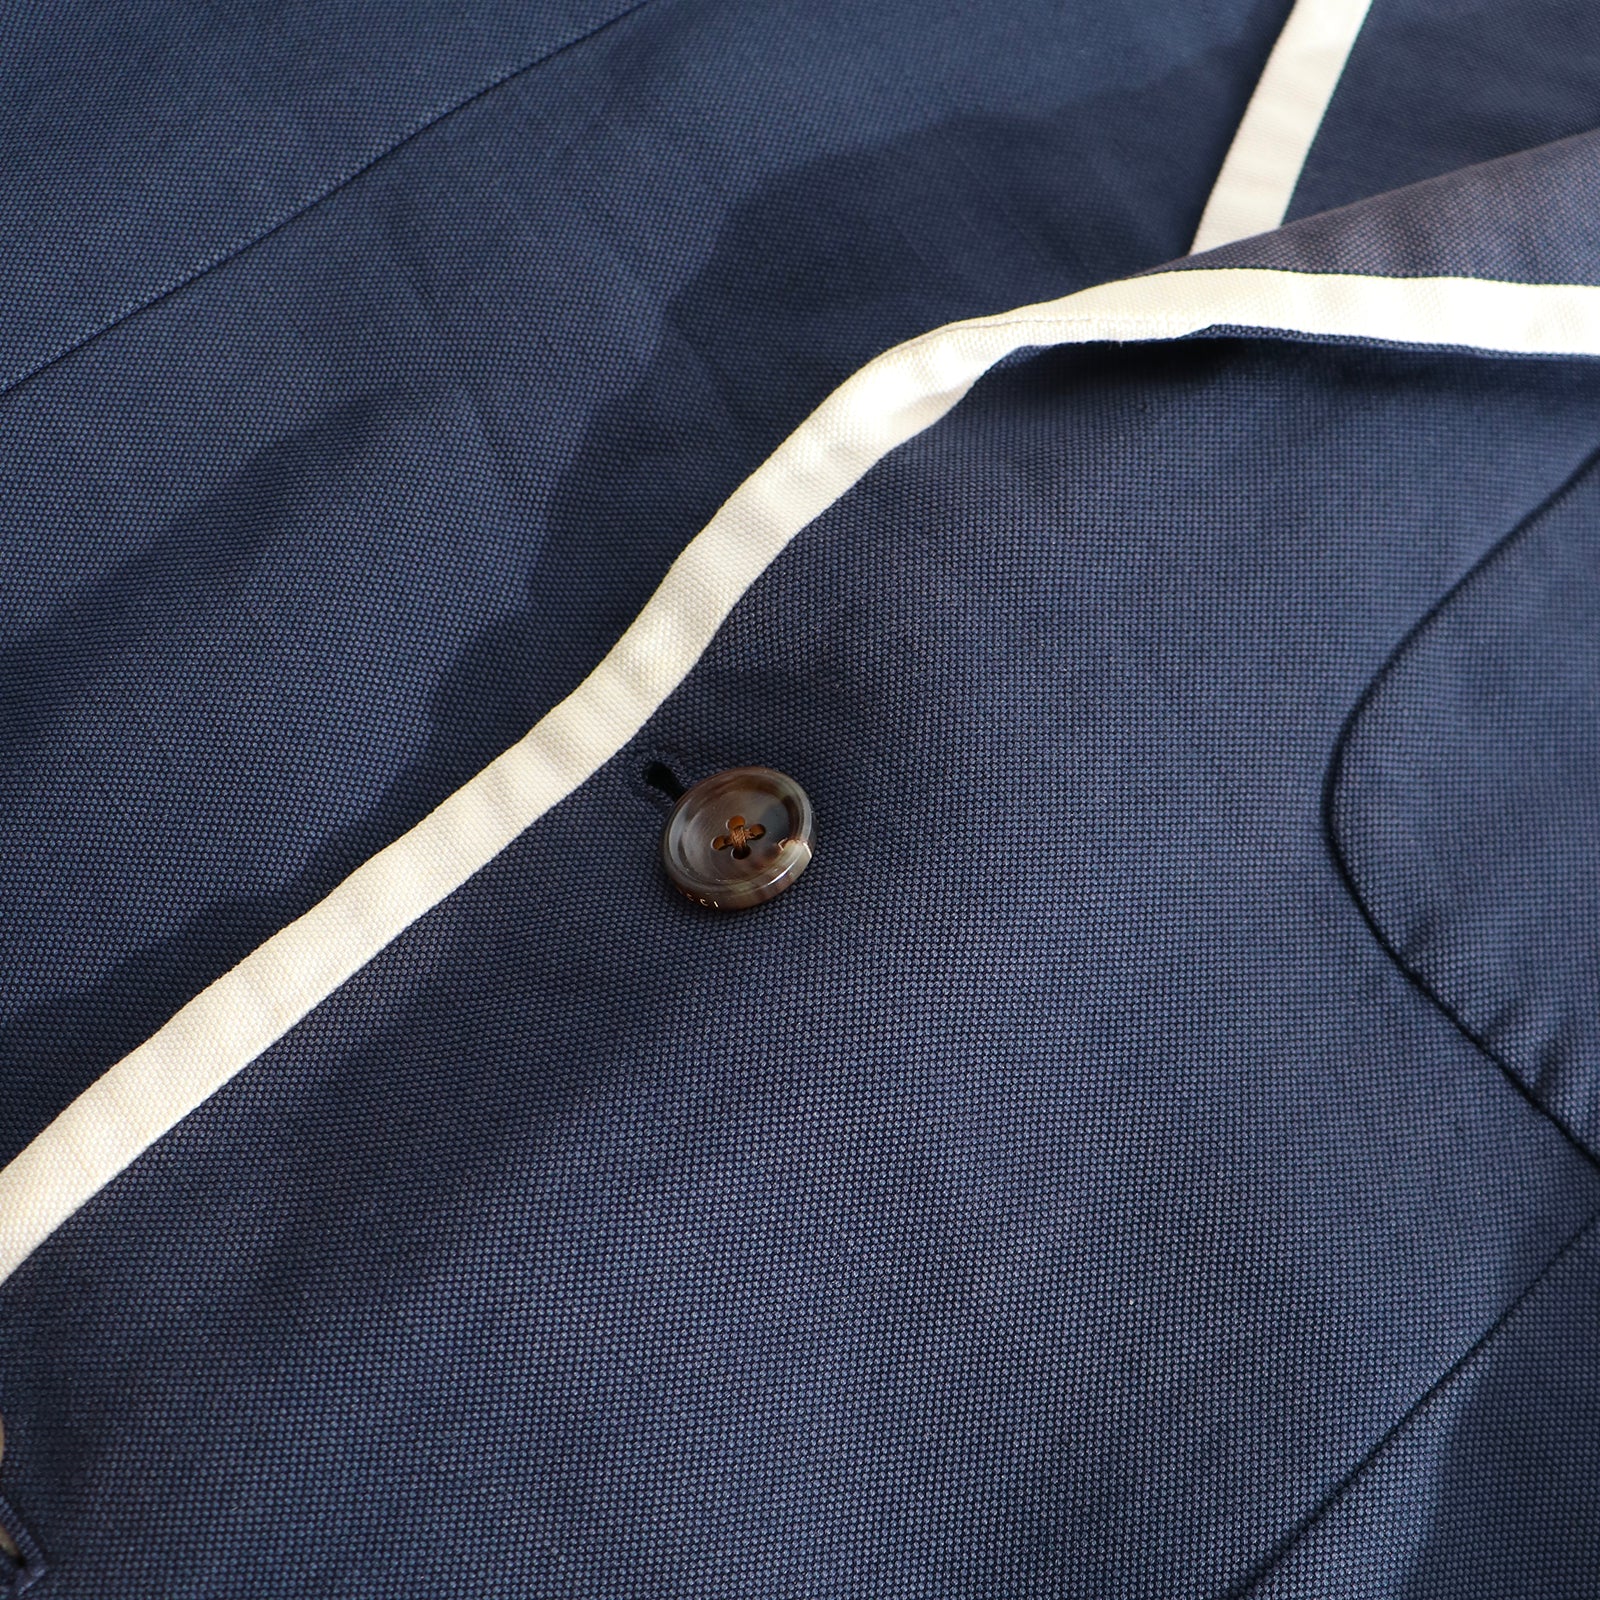 GUCCI - Veste de costume bleu marine (T48)